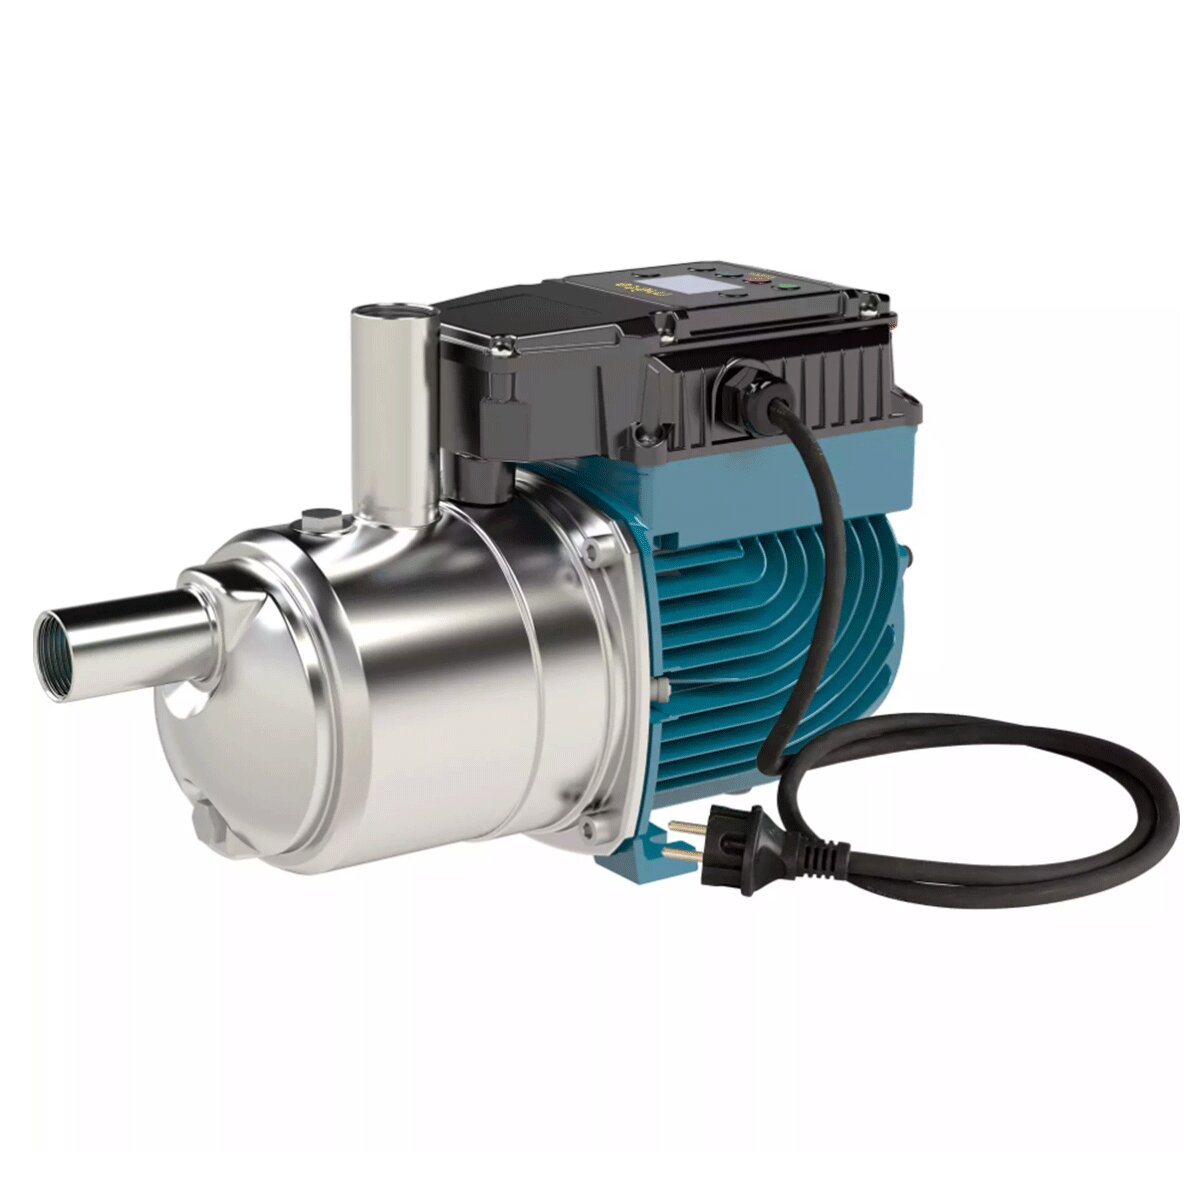 Calpeda Meta Small self-priming multi-impeller single-phase INVERTER pump 0.87 HP/0.65 kW